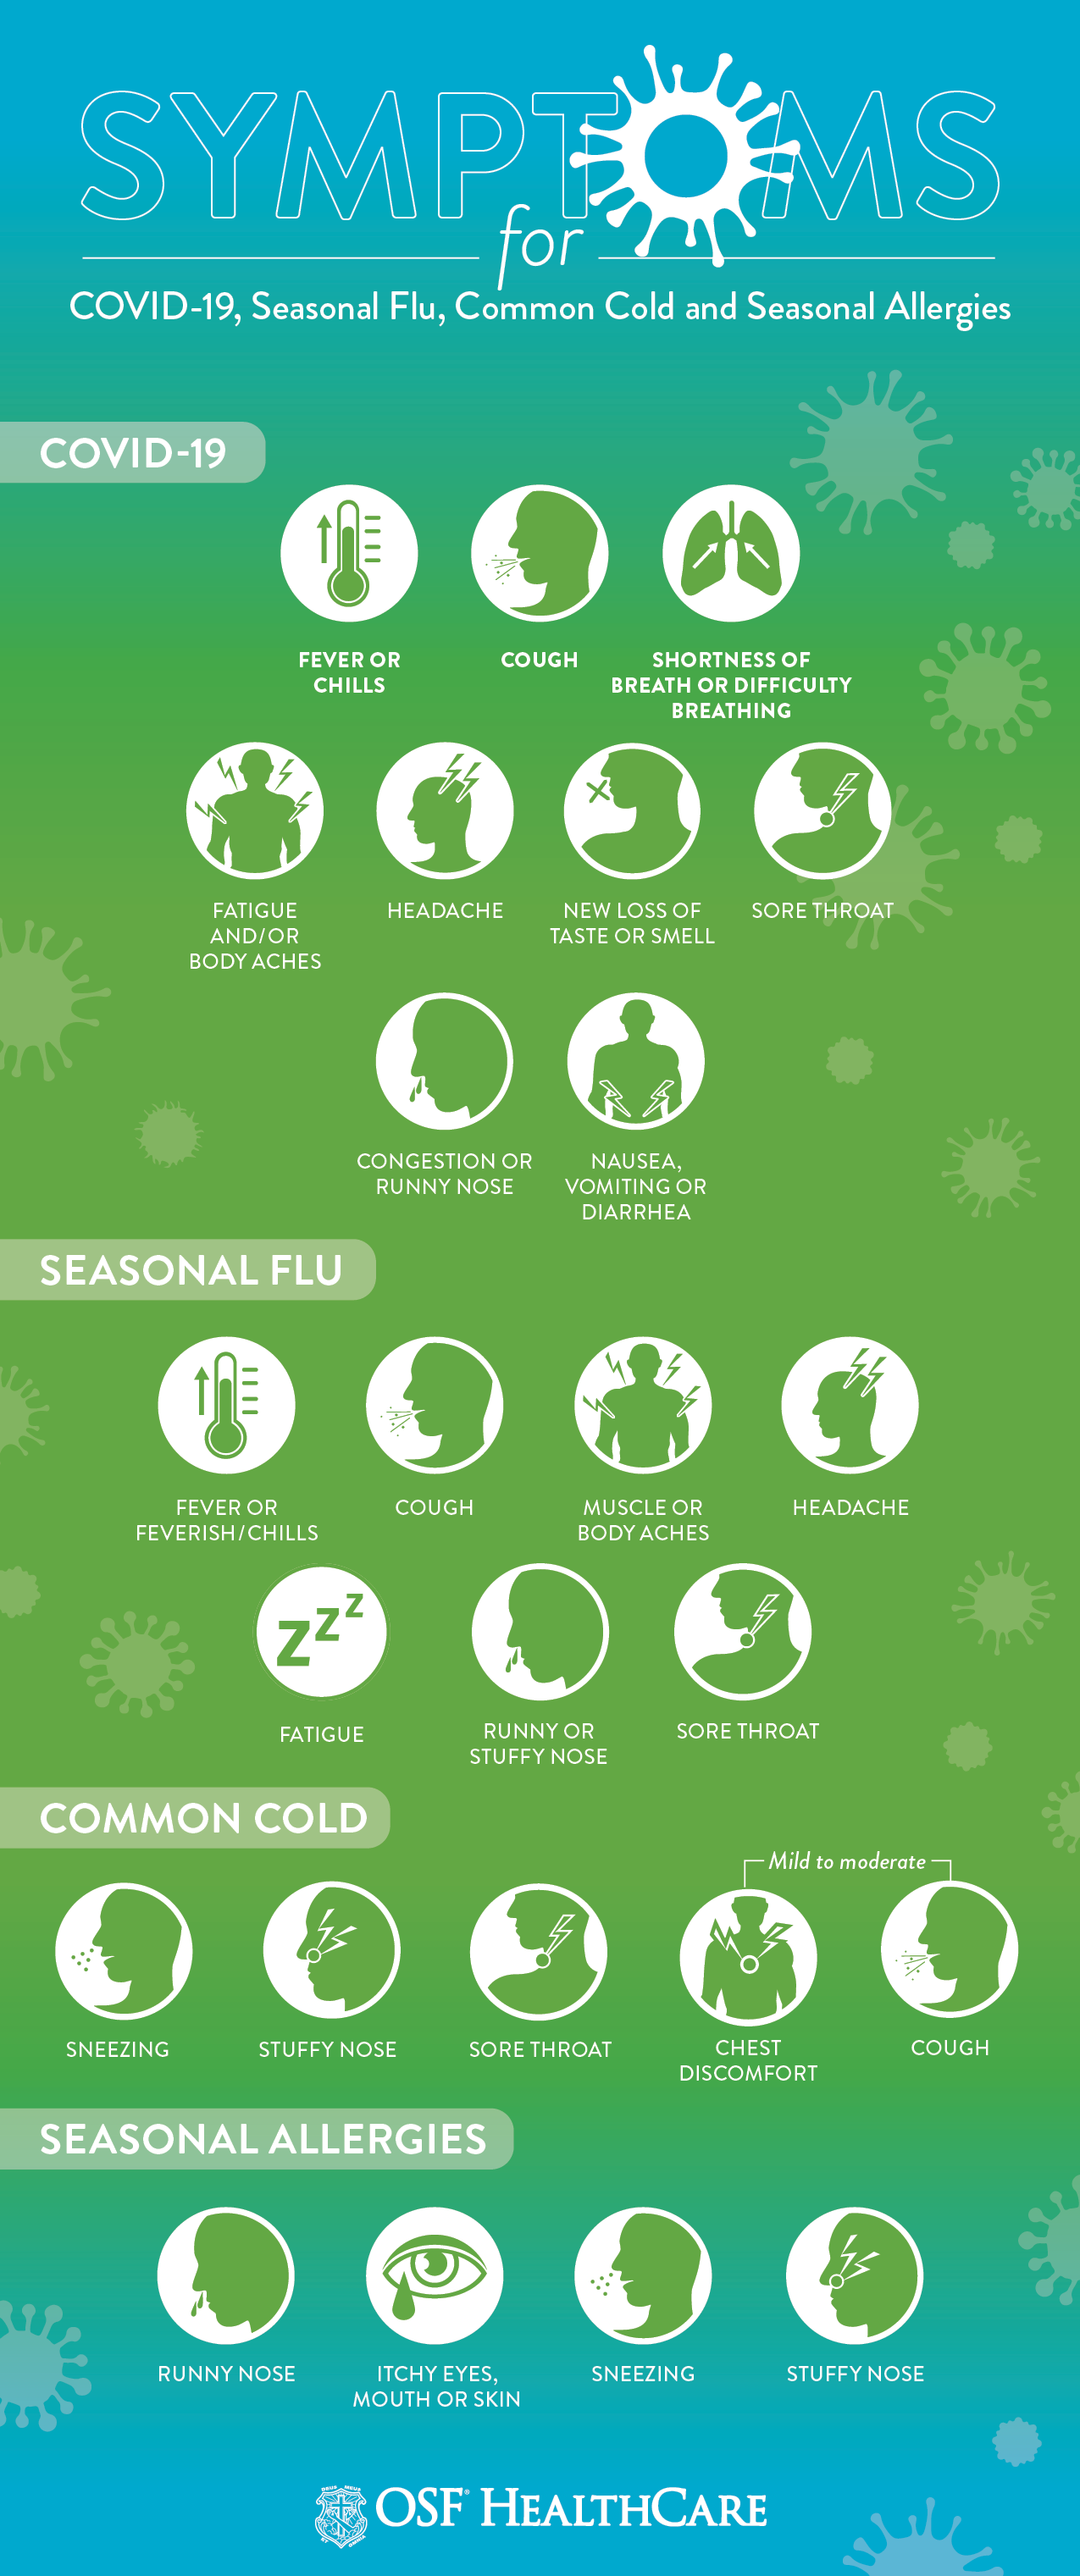 Symptoms for COVID-19, Seasonal Flu, Common Cold and Seasonal Allergies